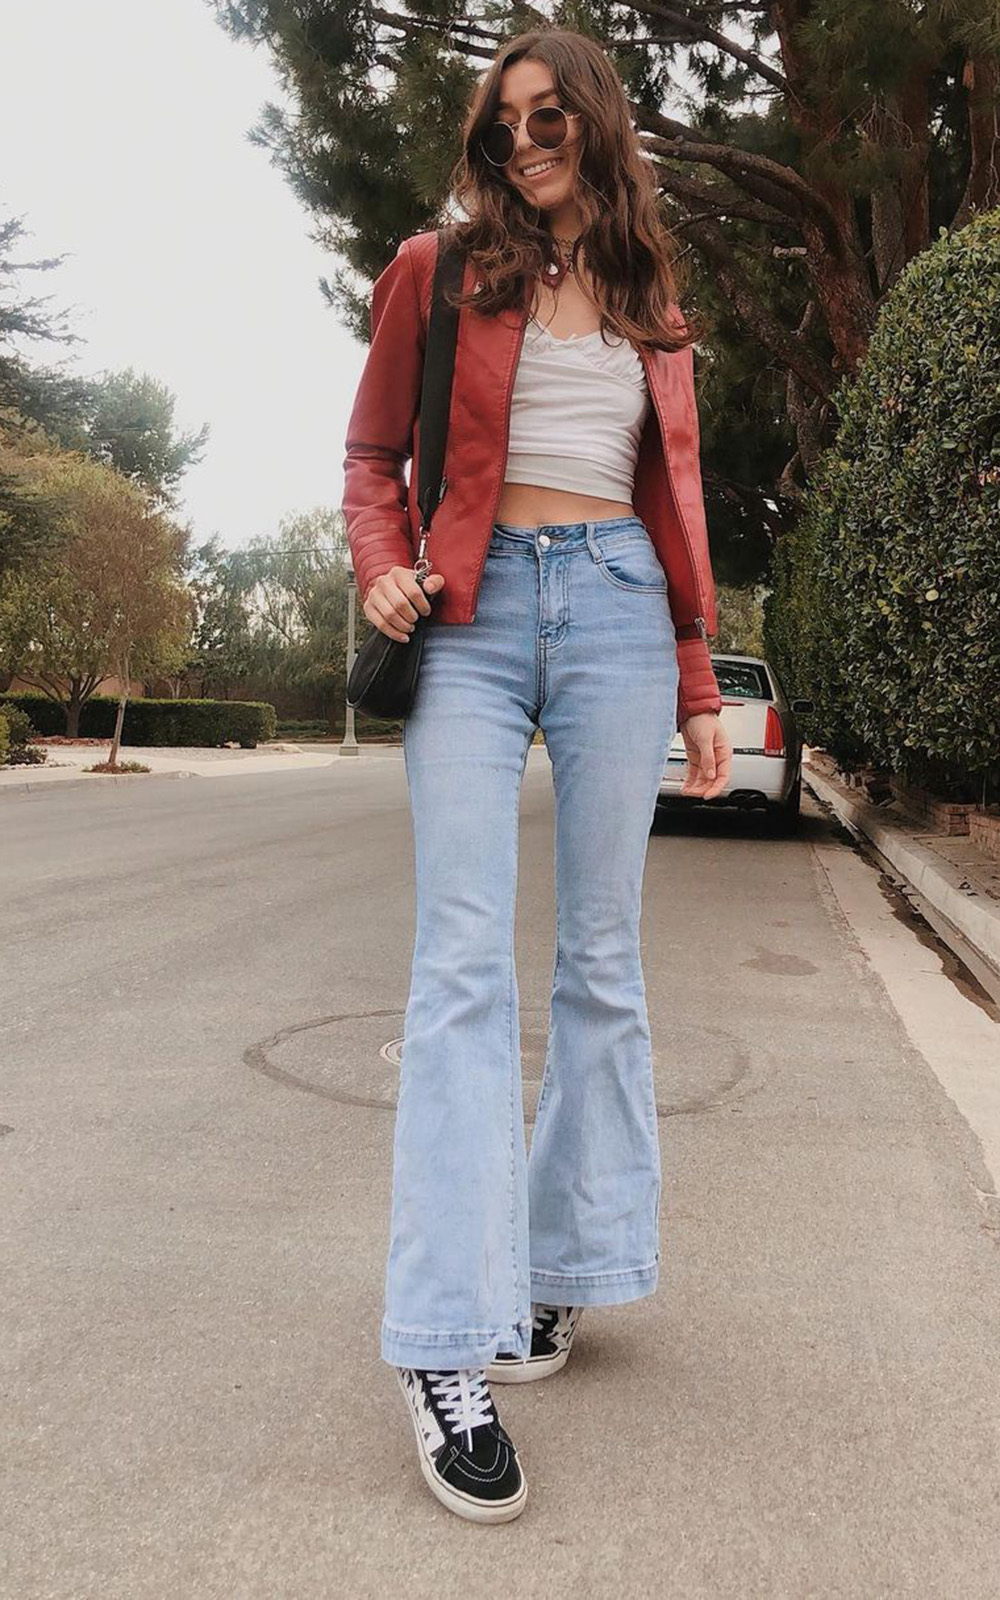 Jeanetter Delmar, jaqueta vermelha, cropped, calça flare jeans